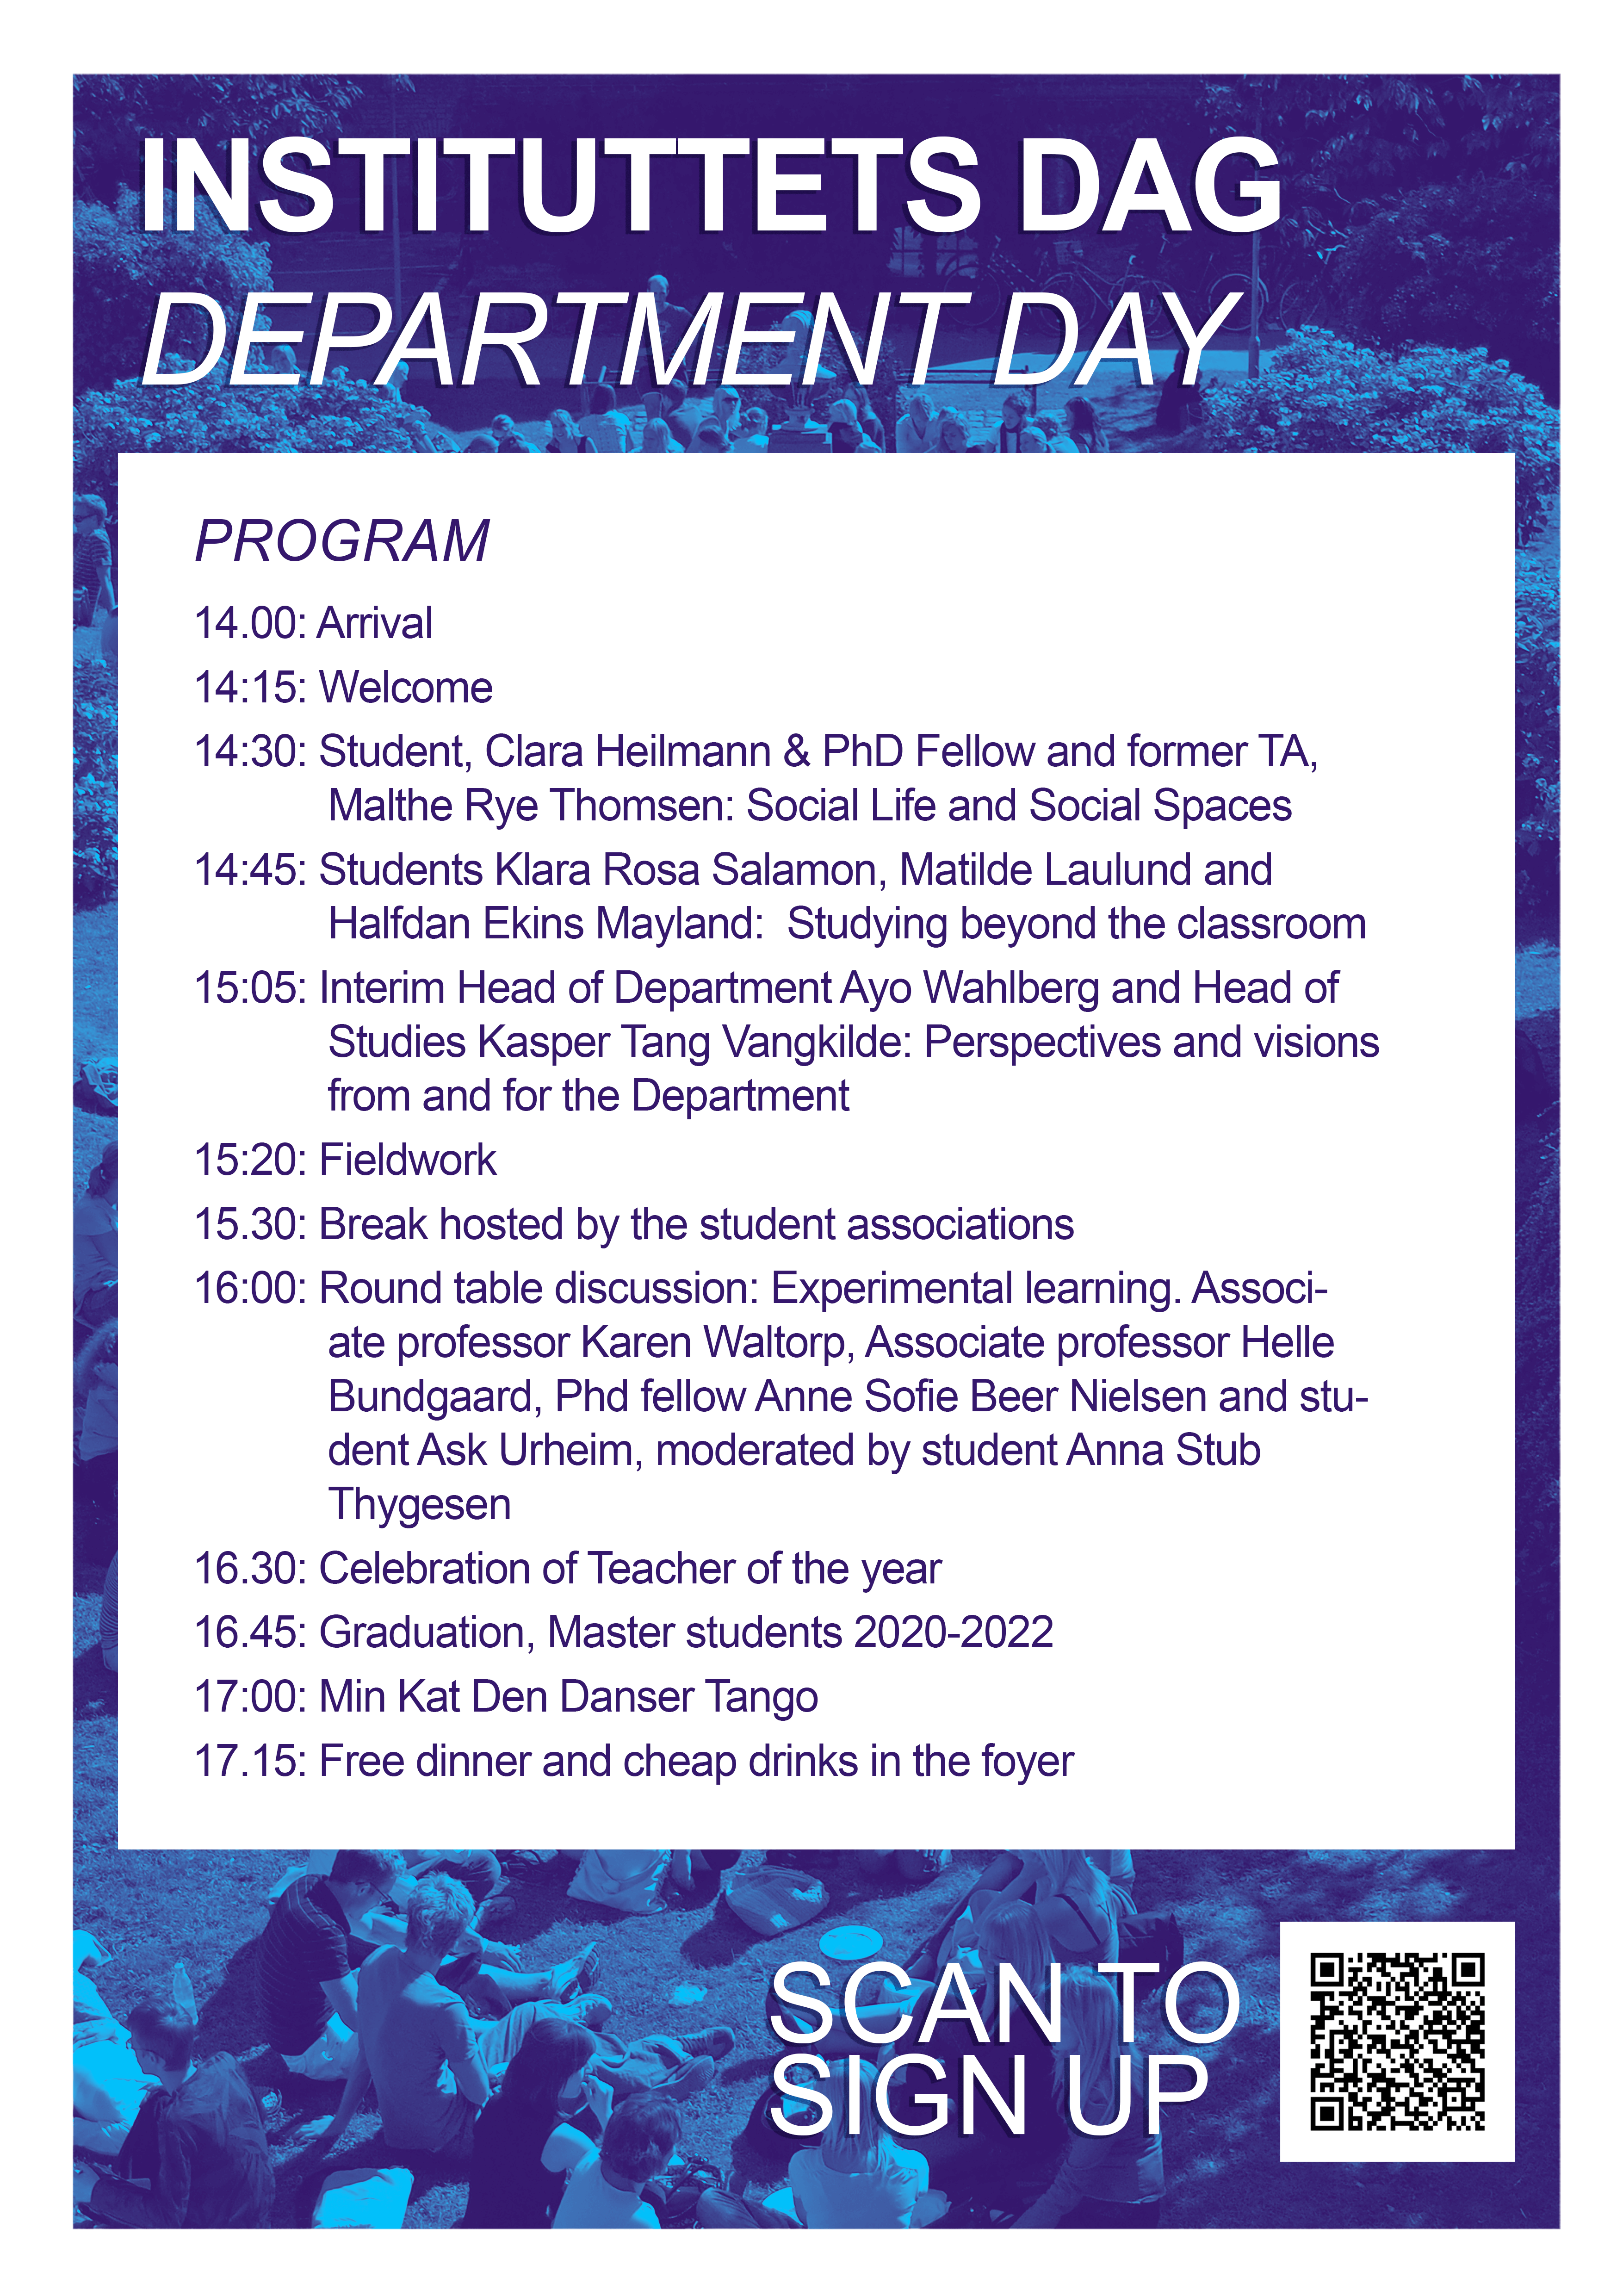 Program for Department day.